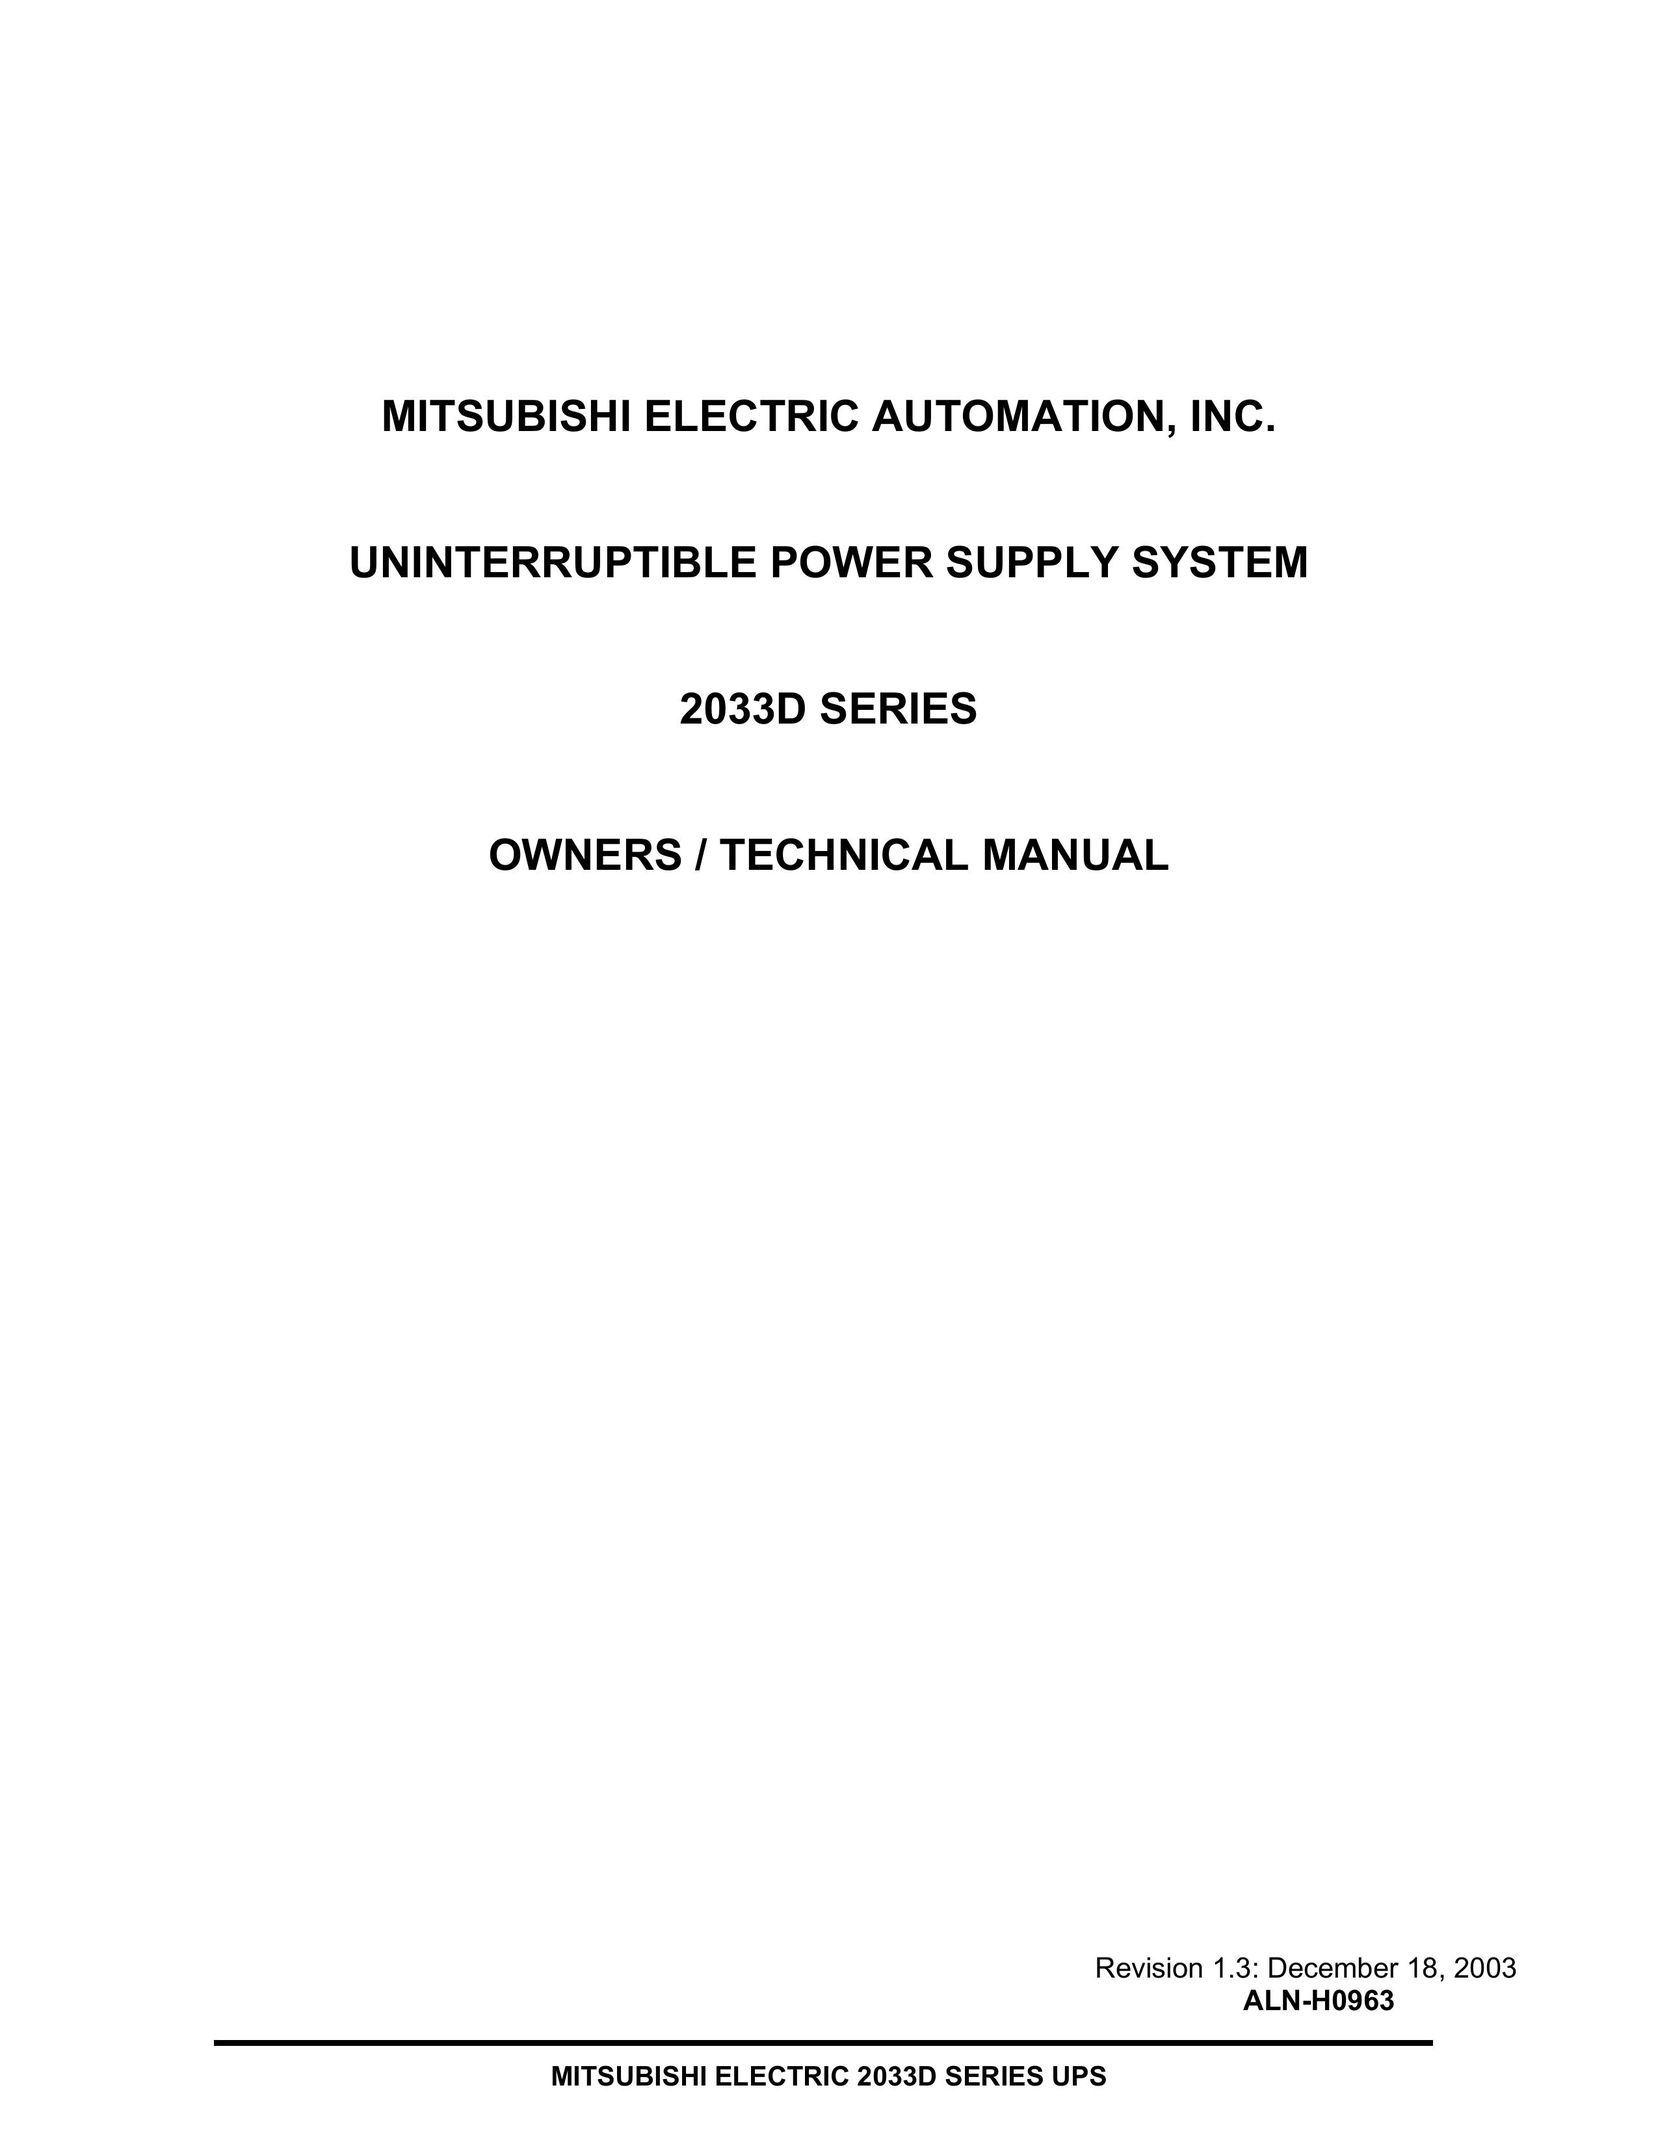 Mitsubishi 2033D SERIES Power Supply User Manual